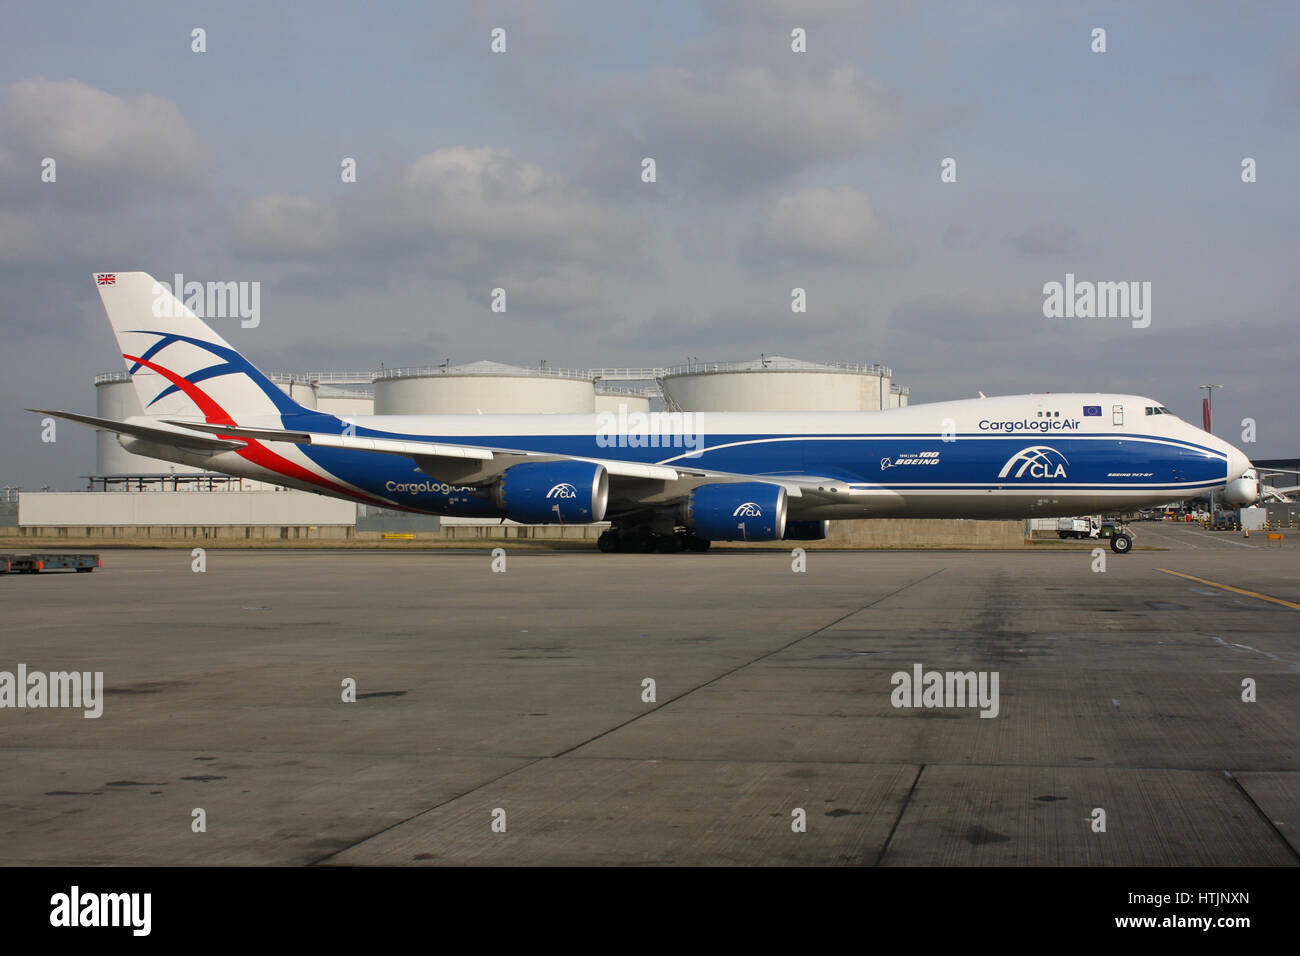 CARGO LOGIC BOEING 747 800 Stock Photo